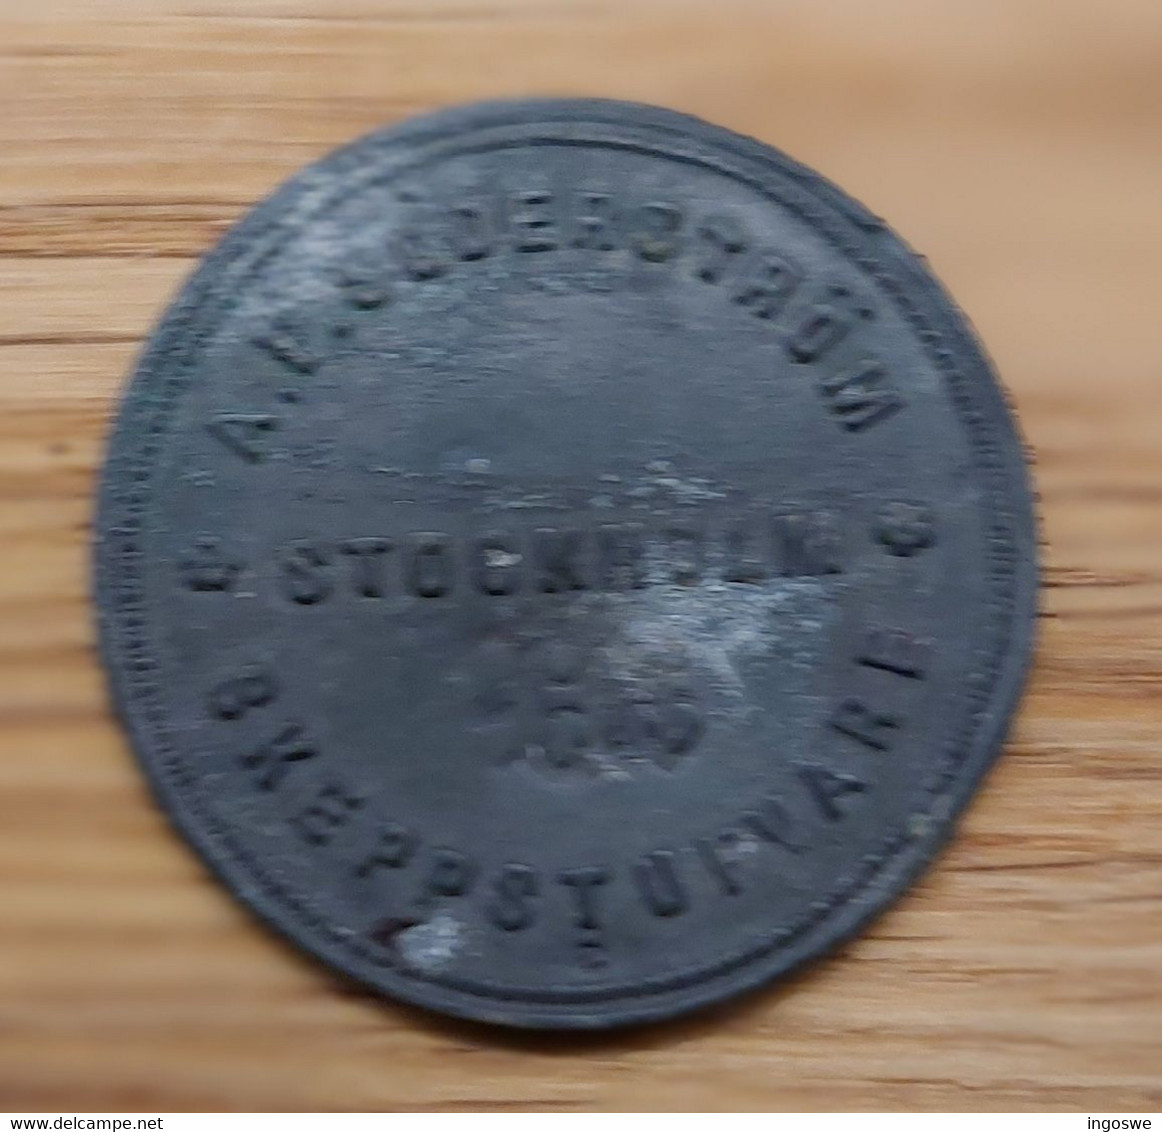 Sweden -  Stockholm - Old Token From Söderström Skeppsstuvare - Not Listed In Stockholmspolletter! About 1880-90 - Gewerbliche